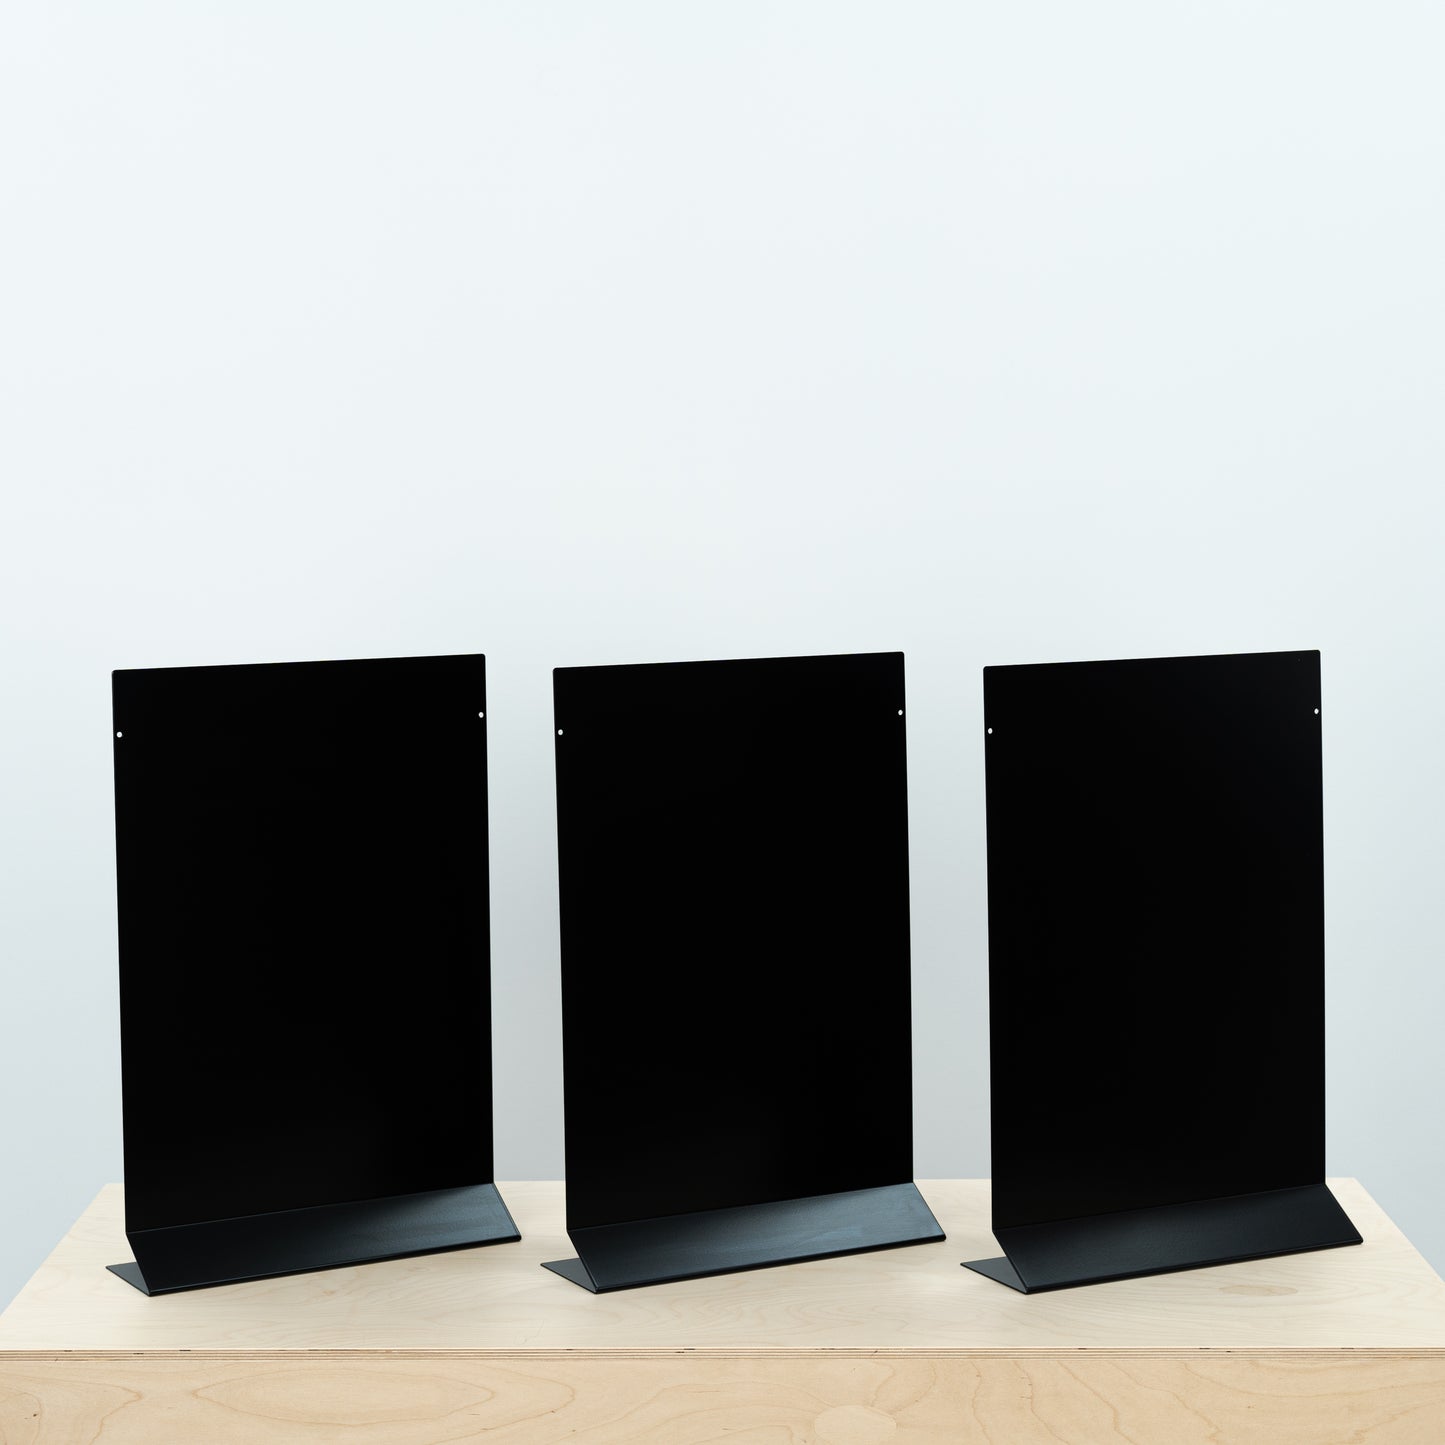 MUSTERVERKAUF | 3er-Set SAP-A3-V-BL magnetische Tischschildtafeln aus Metall, schwarz, vertikal, Größe A3 (Tabloid)